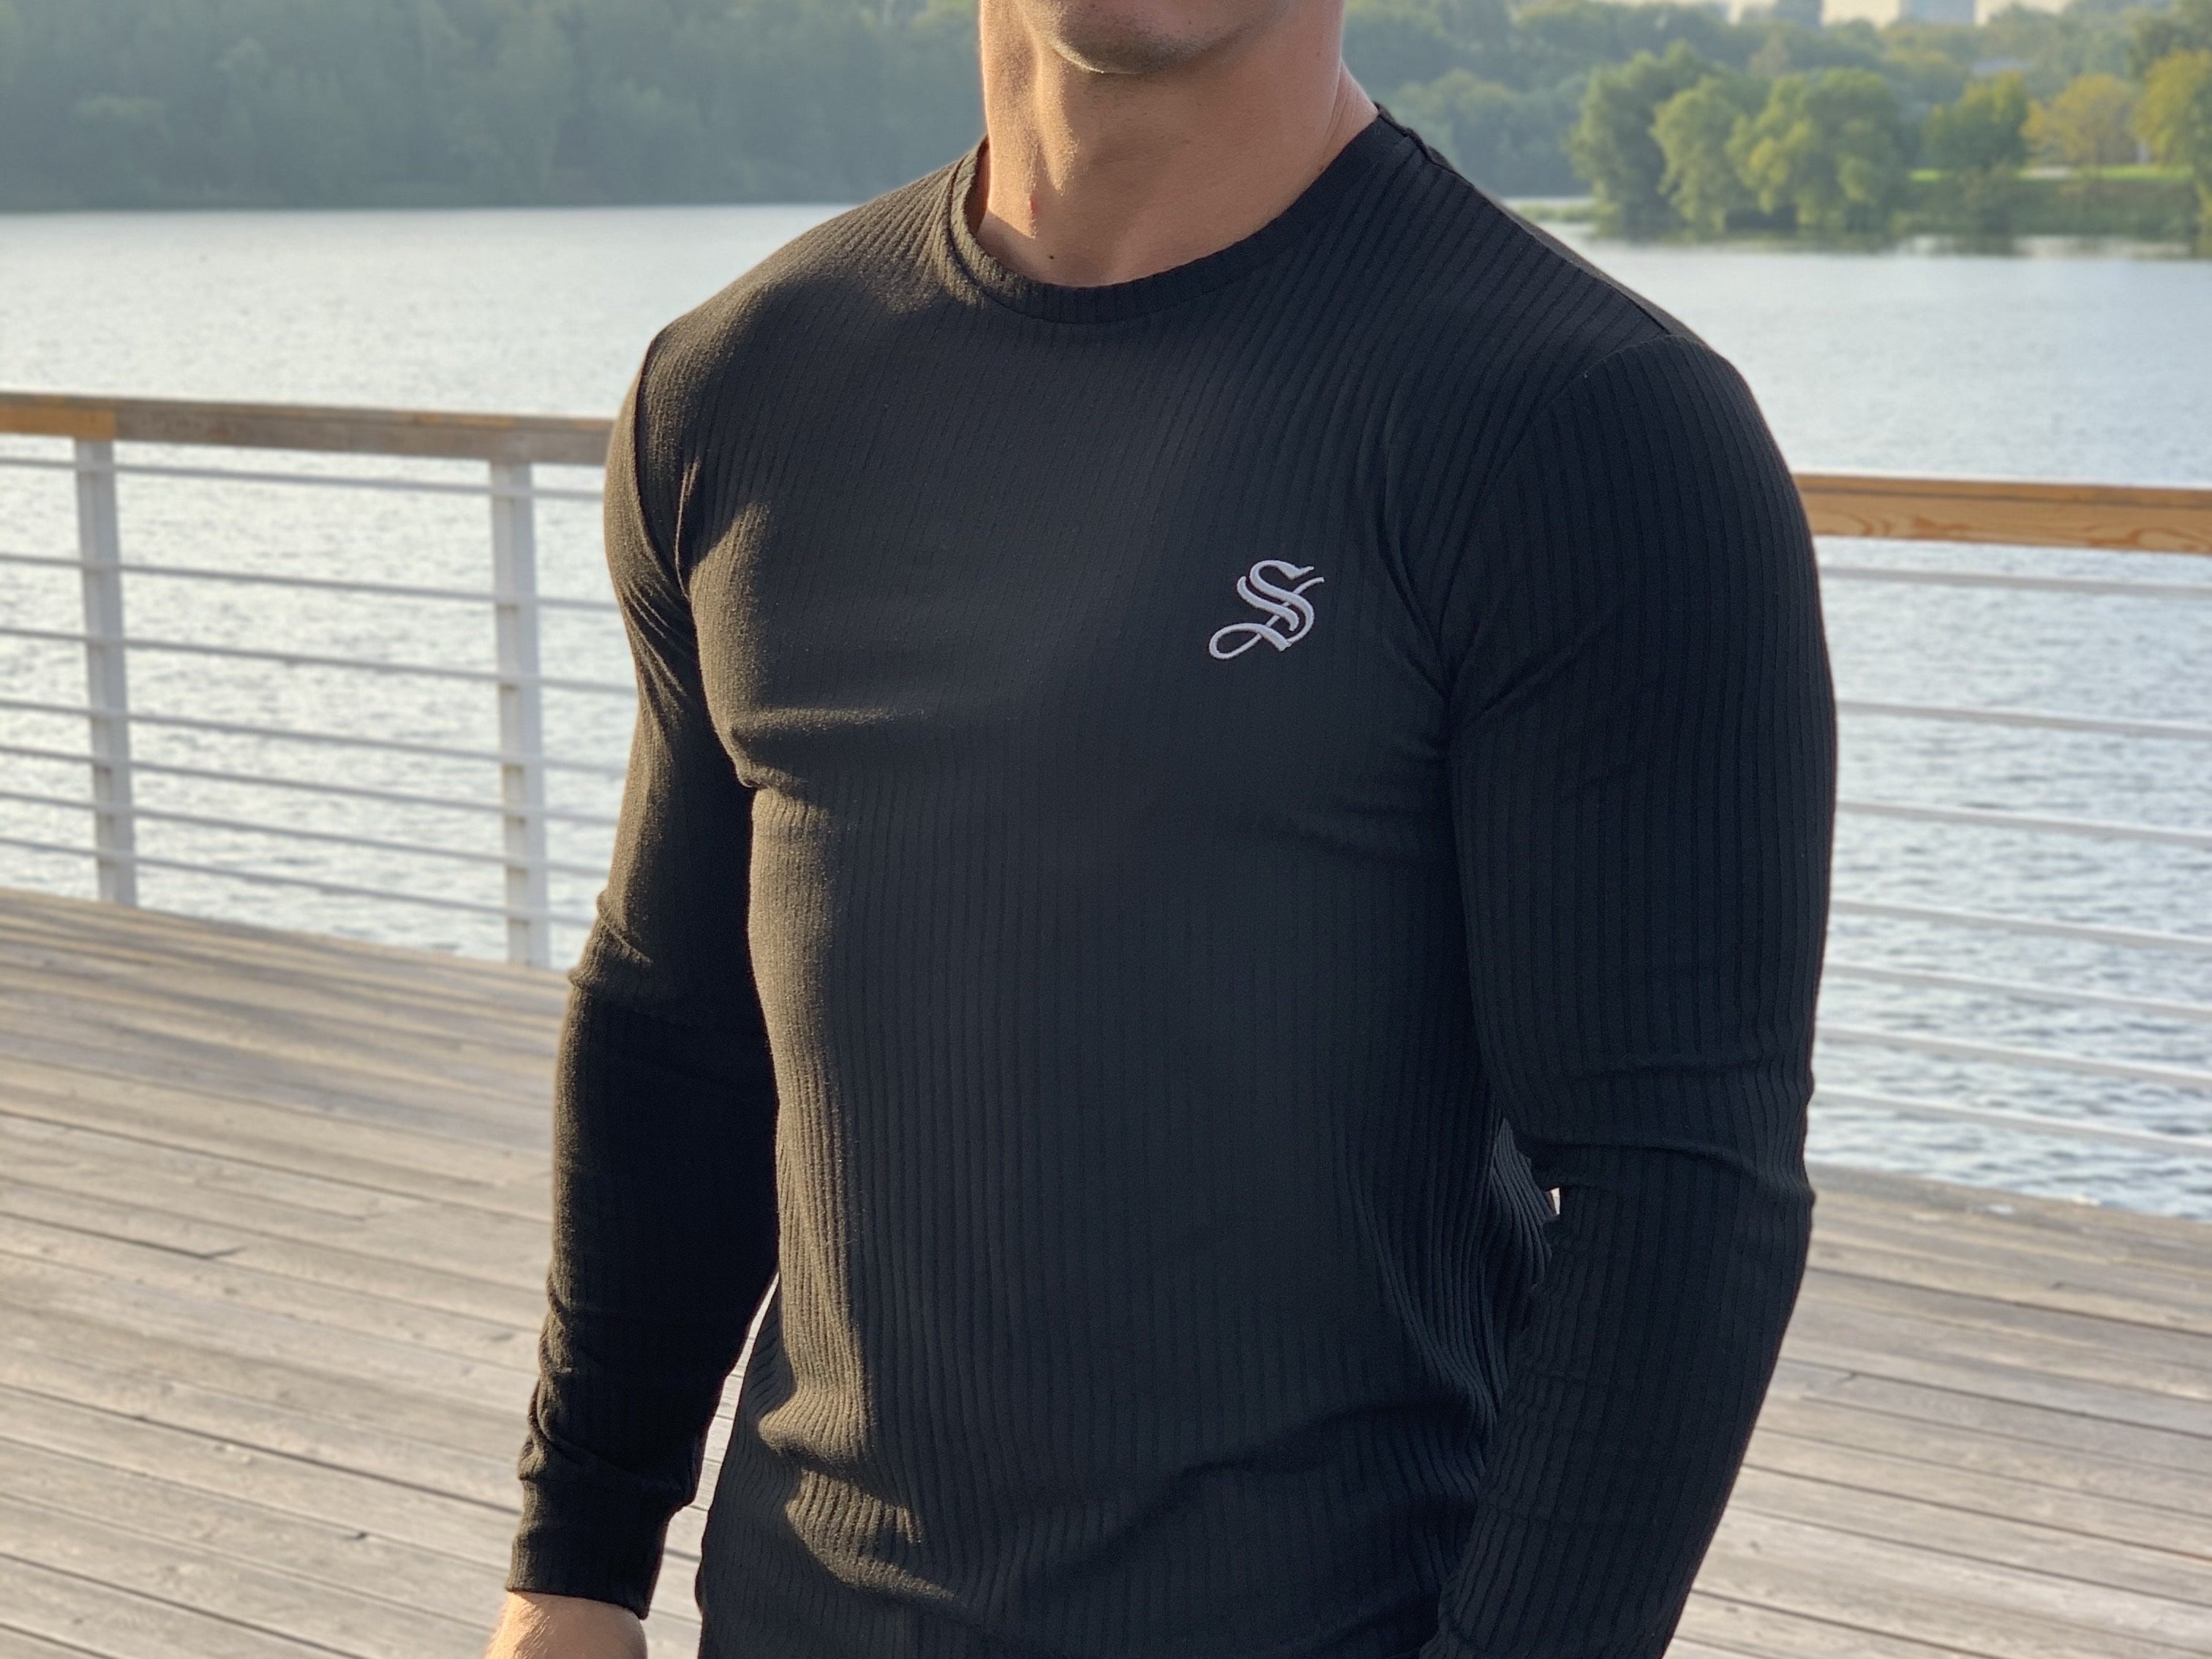 Base 1 - Black Long Sleeve Shirt for Men - Sarman Fashion - Wholesale Clothing Fashion Brand for Men from Canada